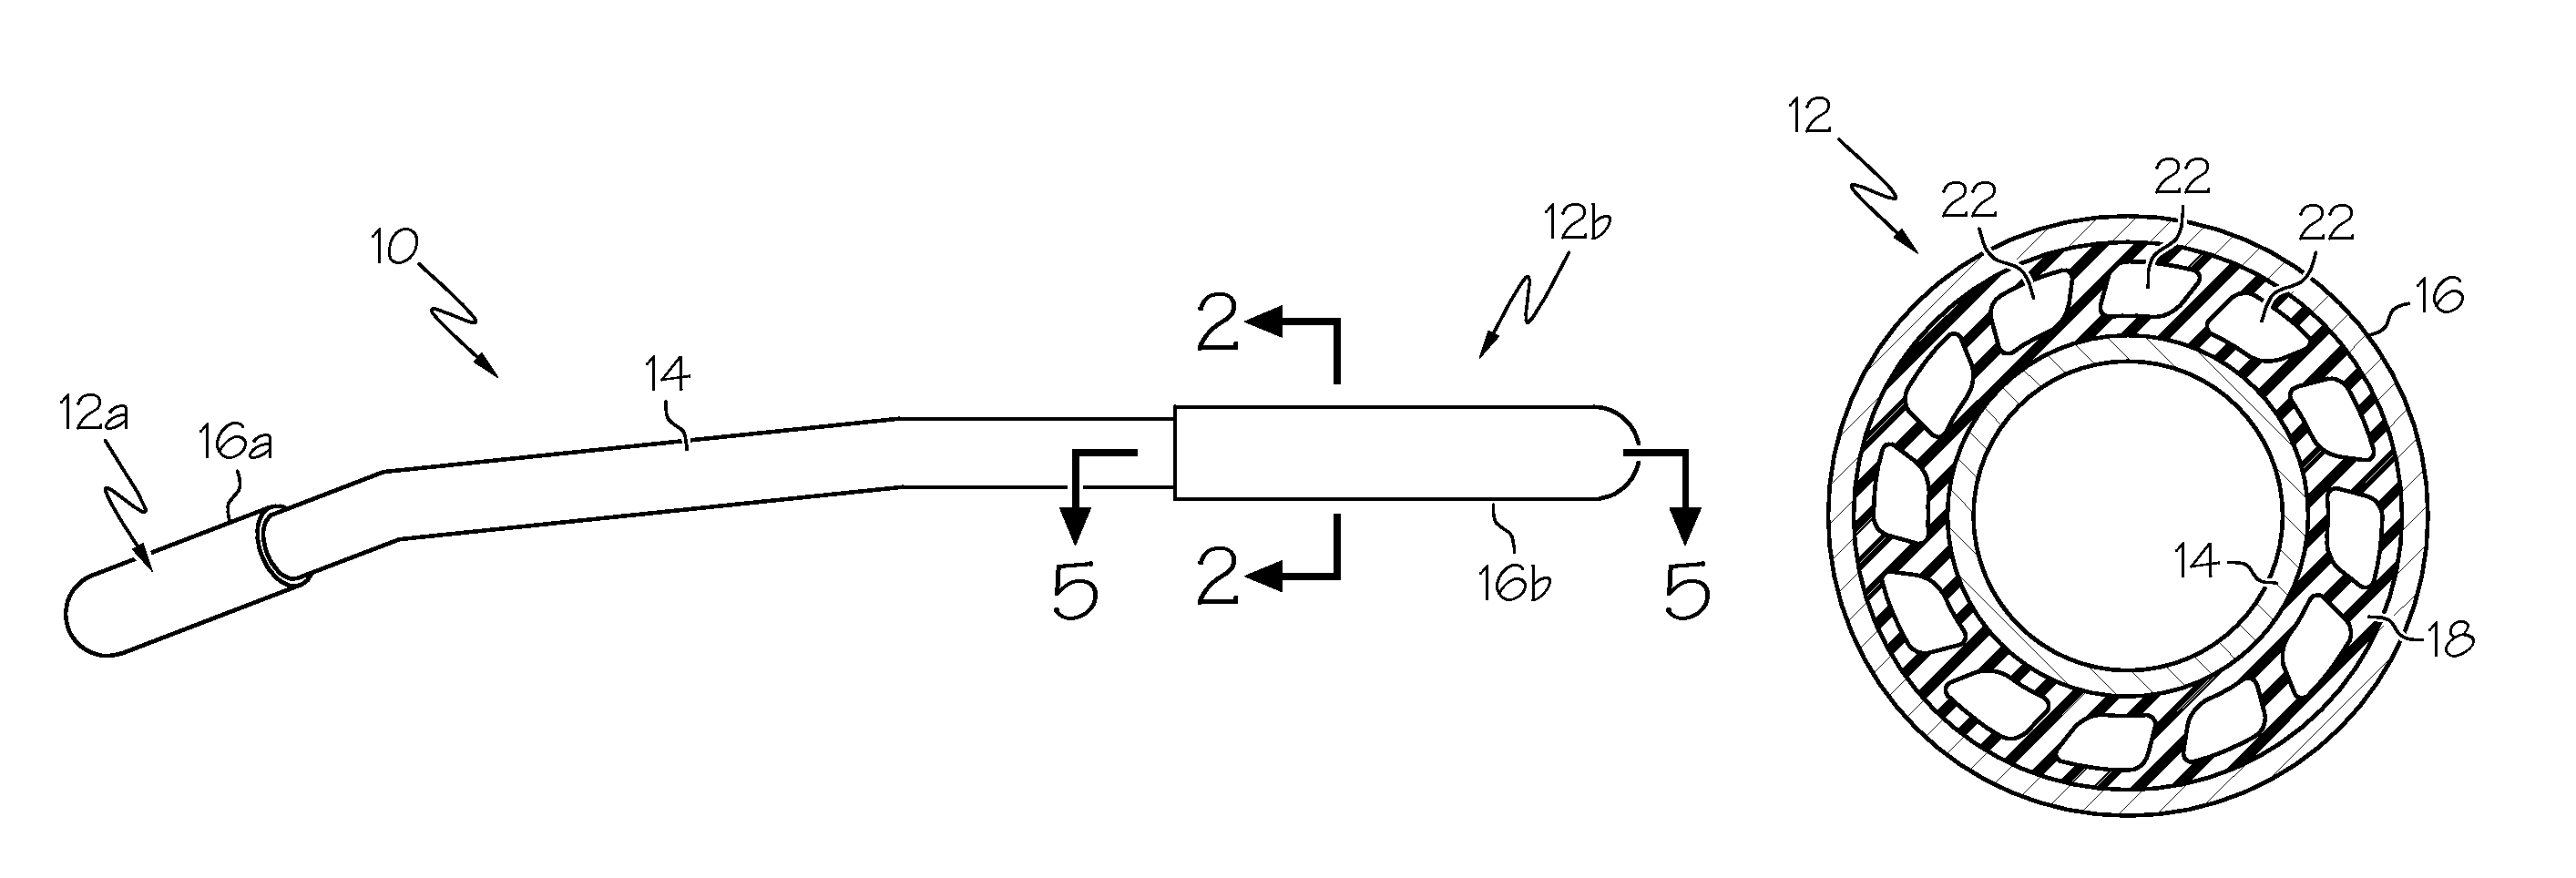 Coaxial tube damper